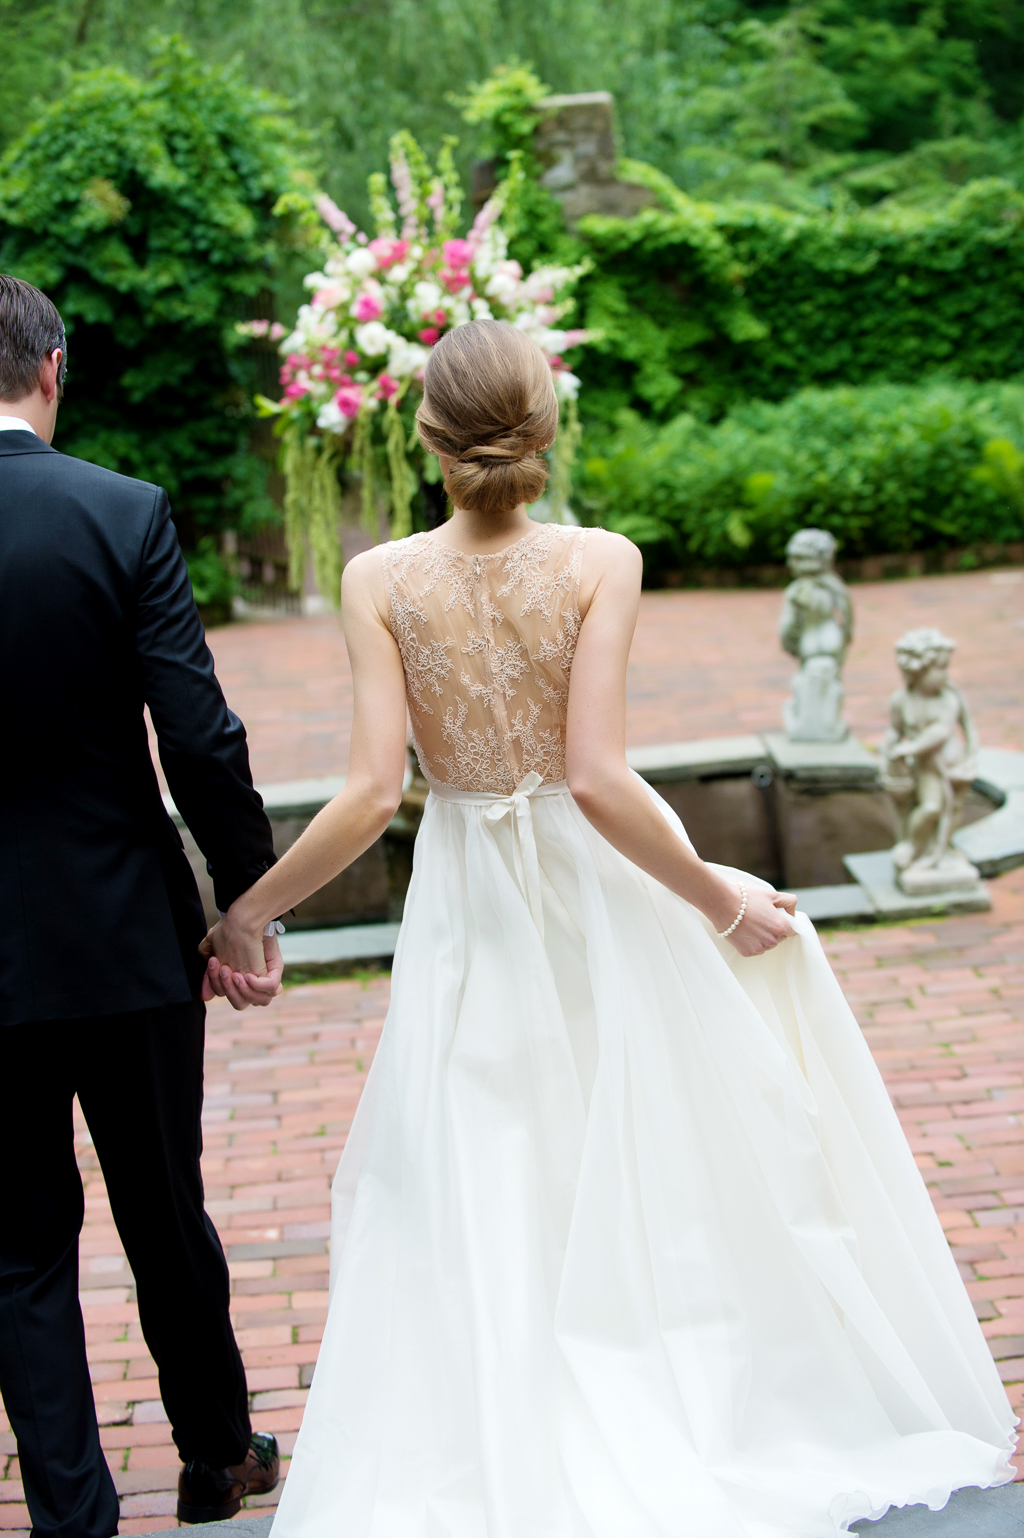 bride wears beautiful lace back wedding dress with pretty hair in bun as she walks towards fountain holding groom's hand